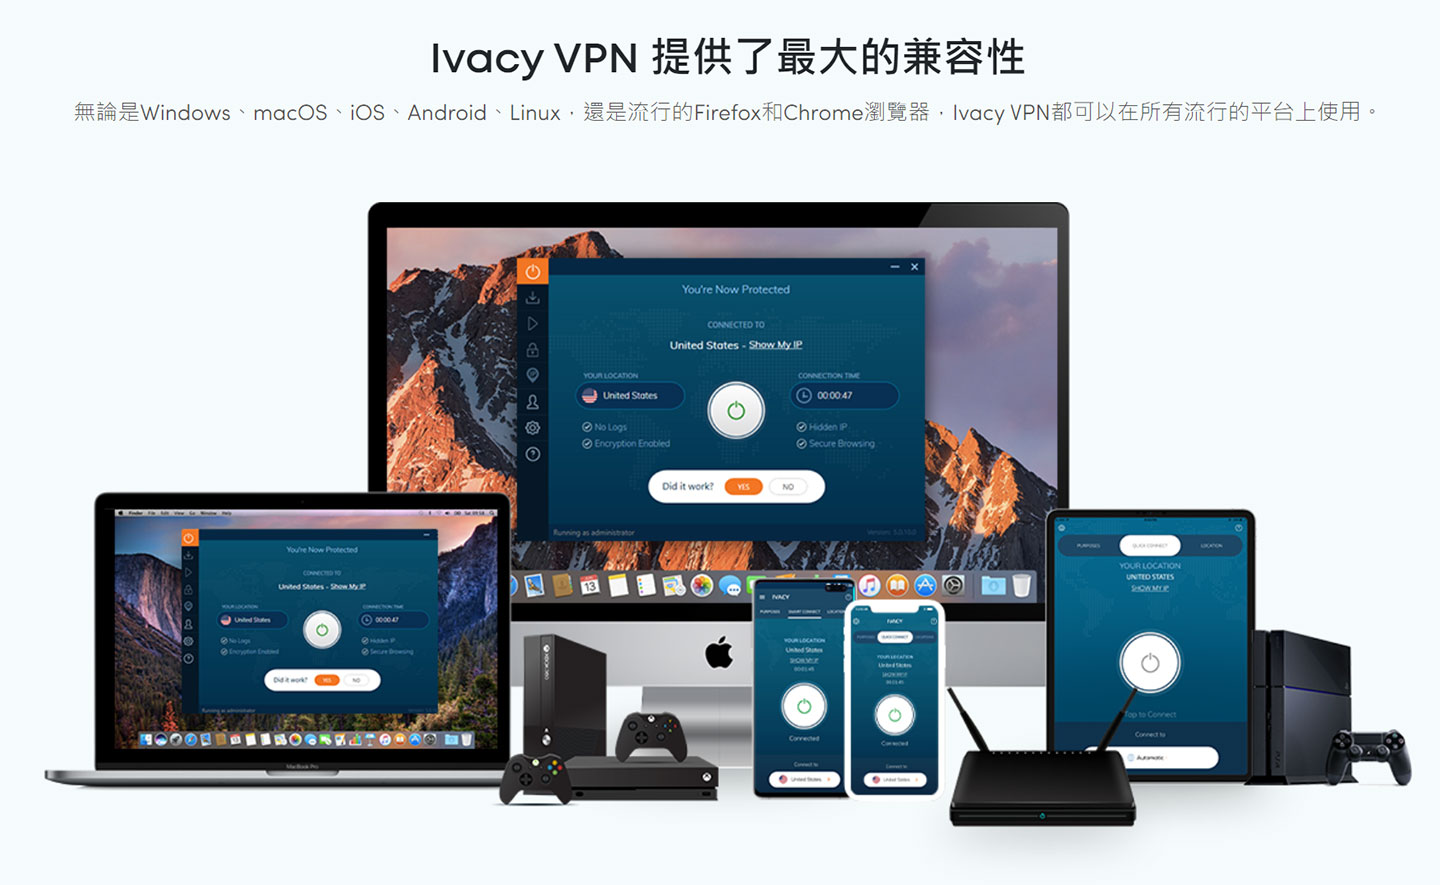 Ivacy VPN 提供多平台的完整支援，包括電腦、行動裝置、遊樂器…�。